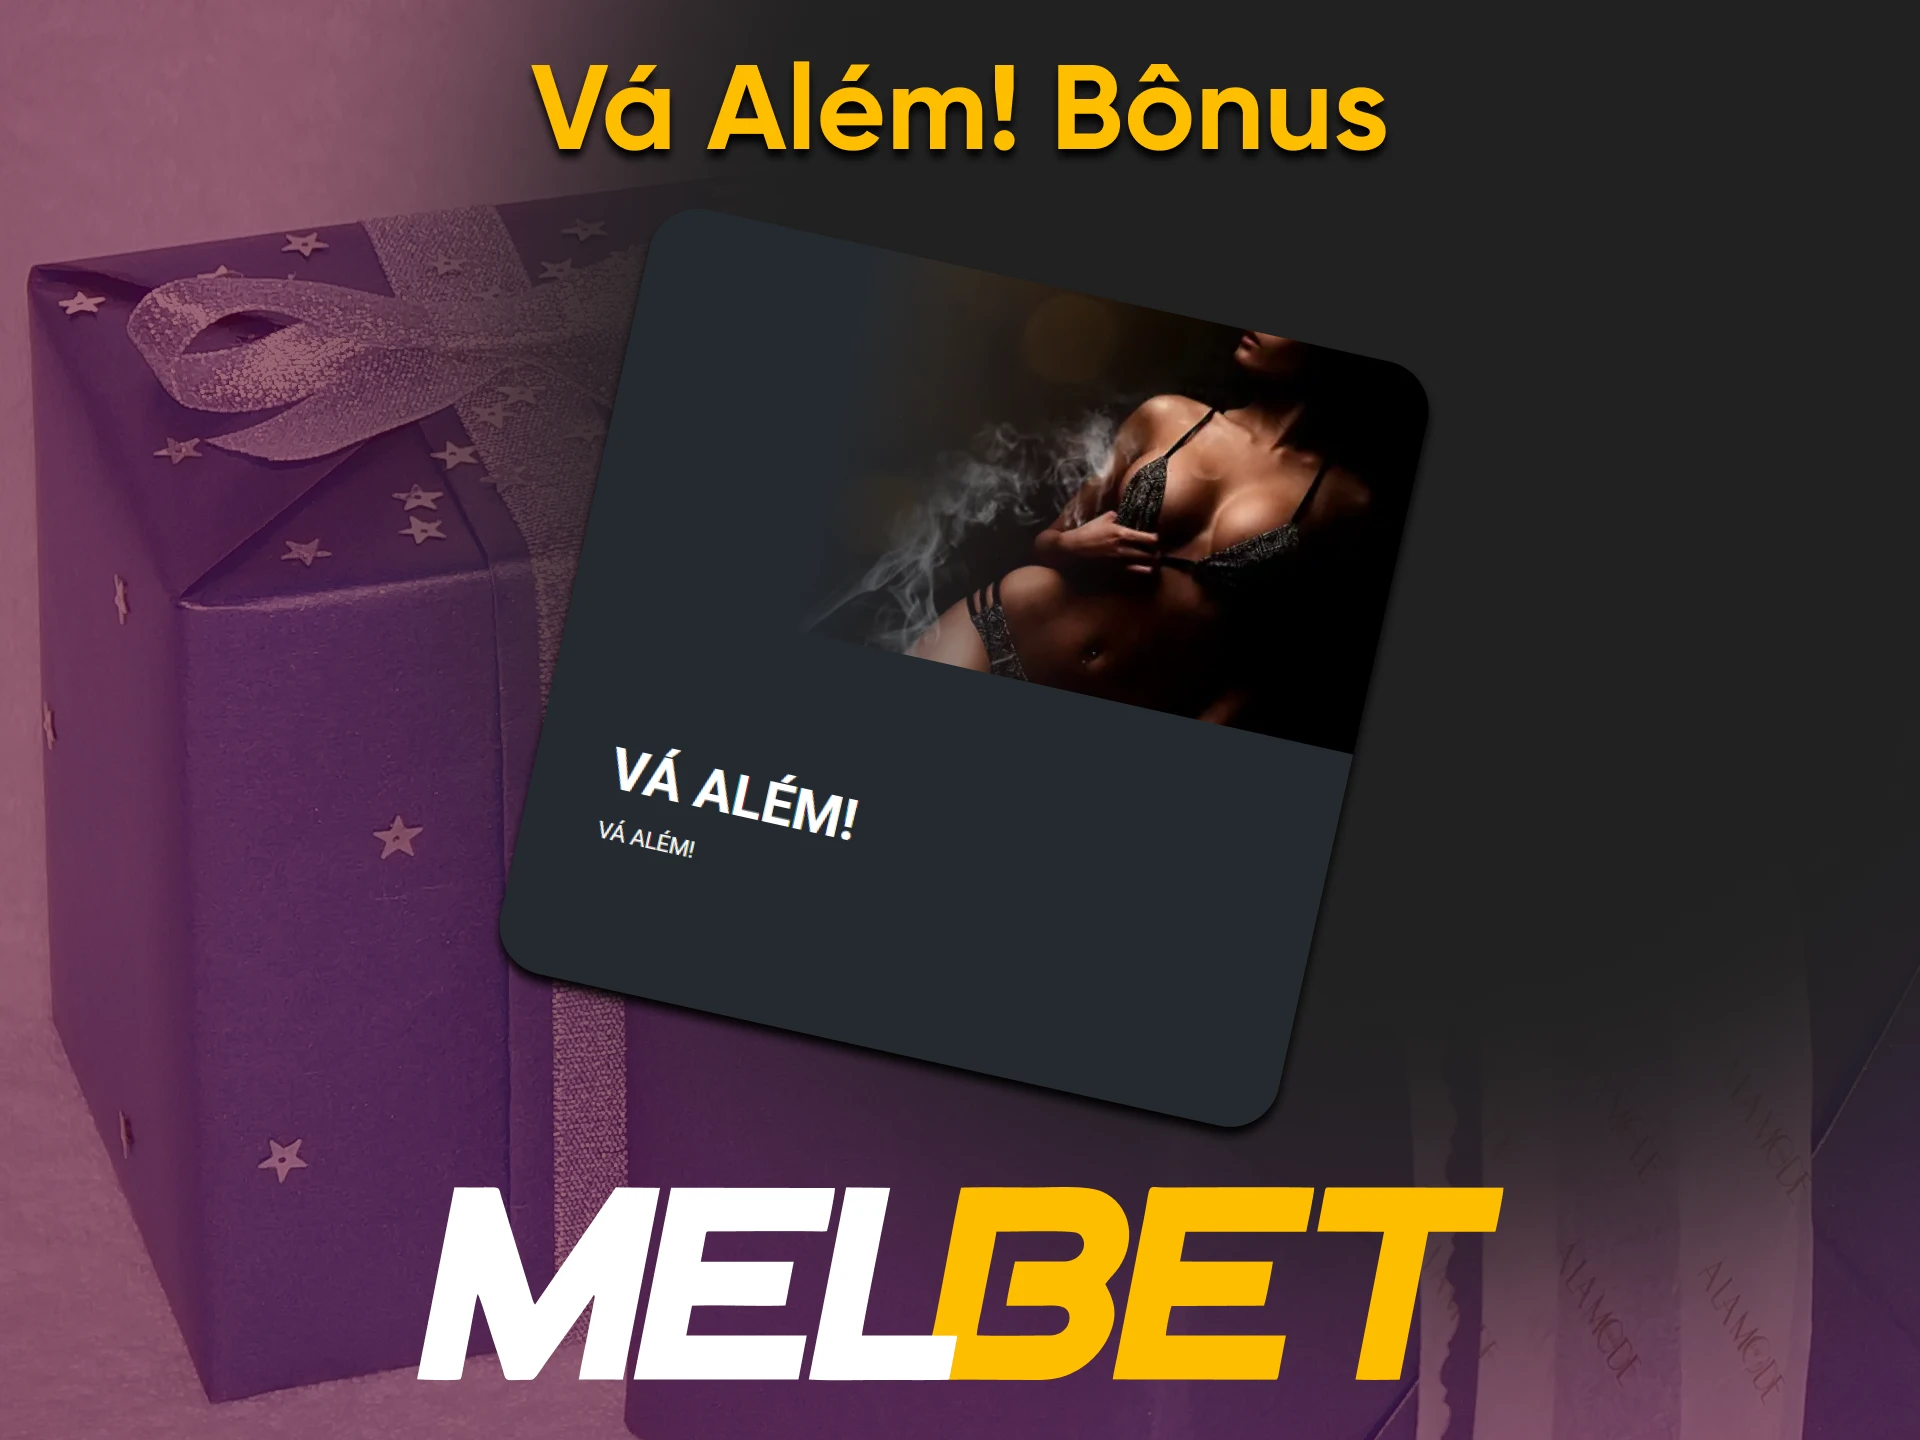 Melbet has a free bet bonus.